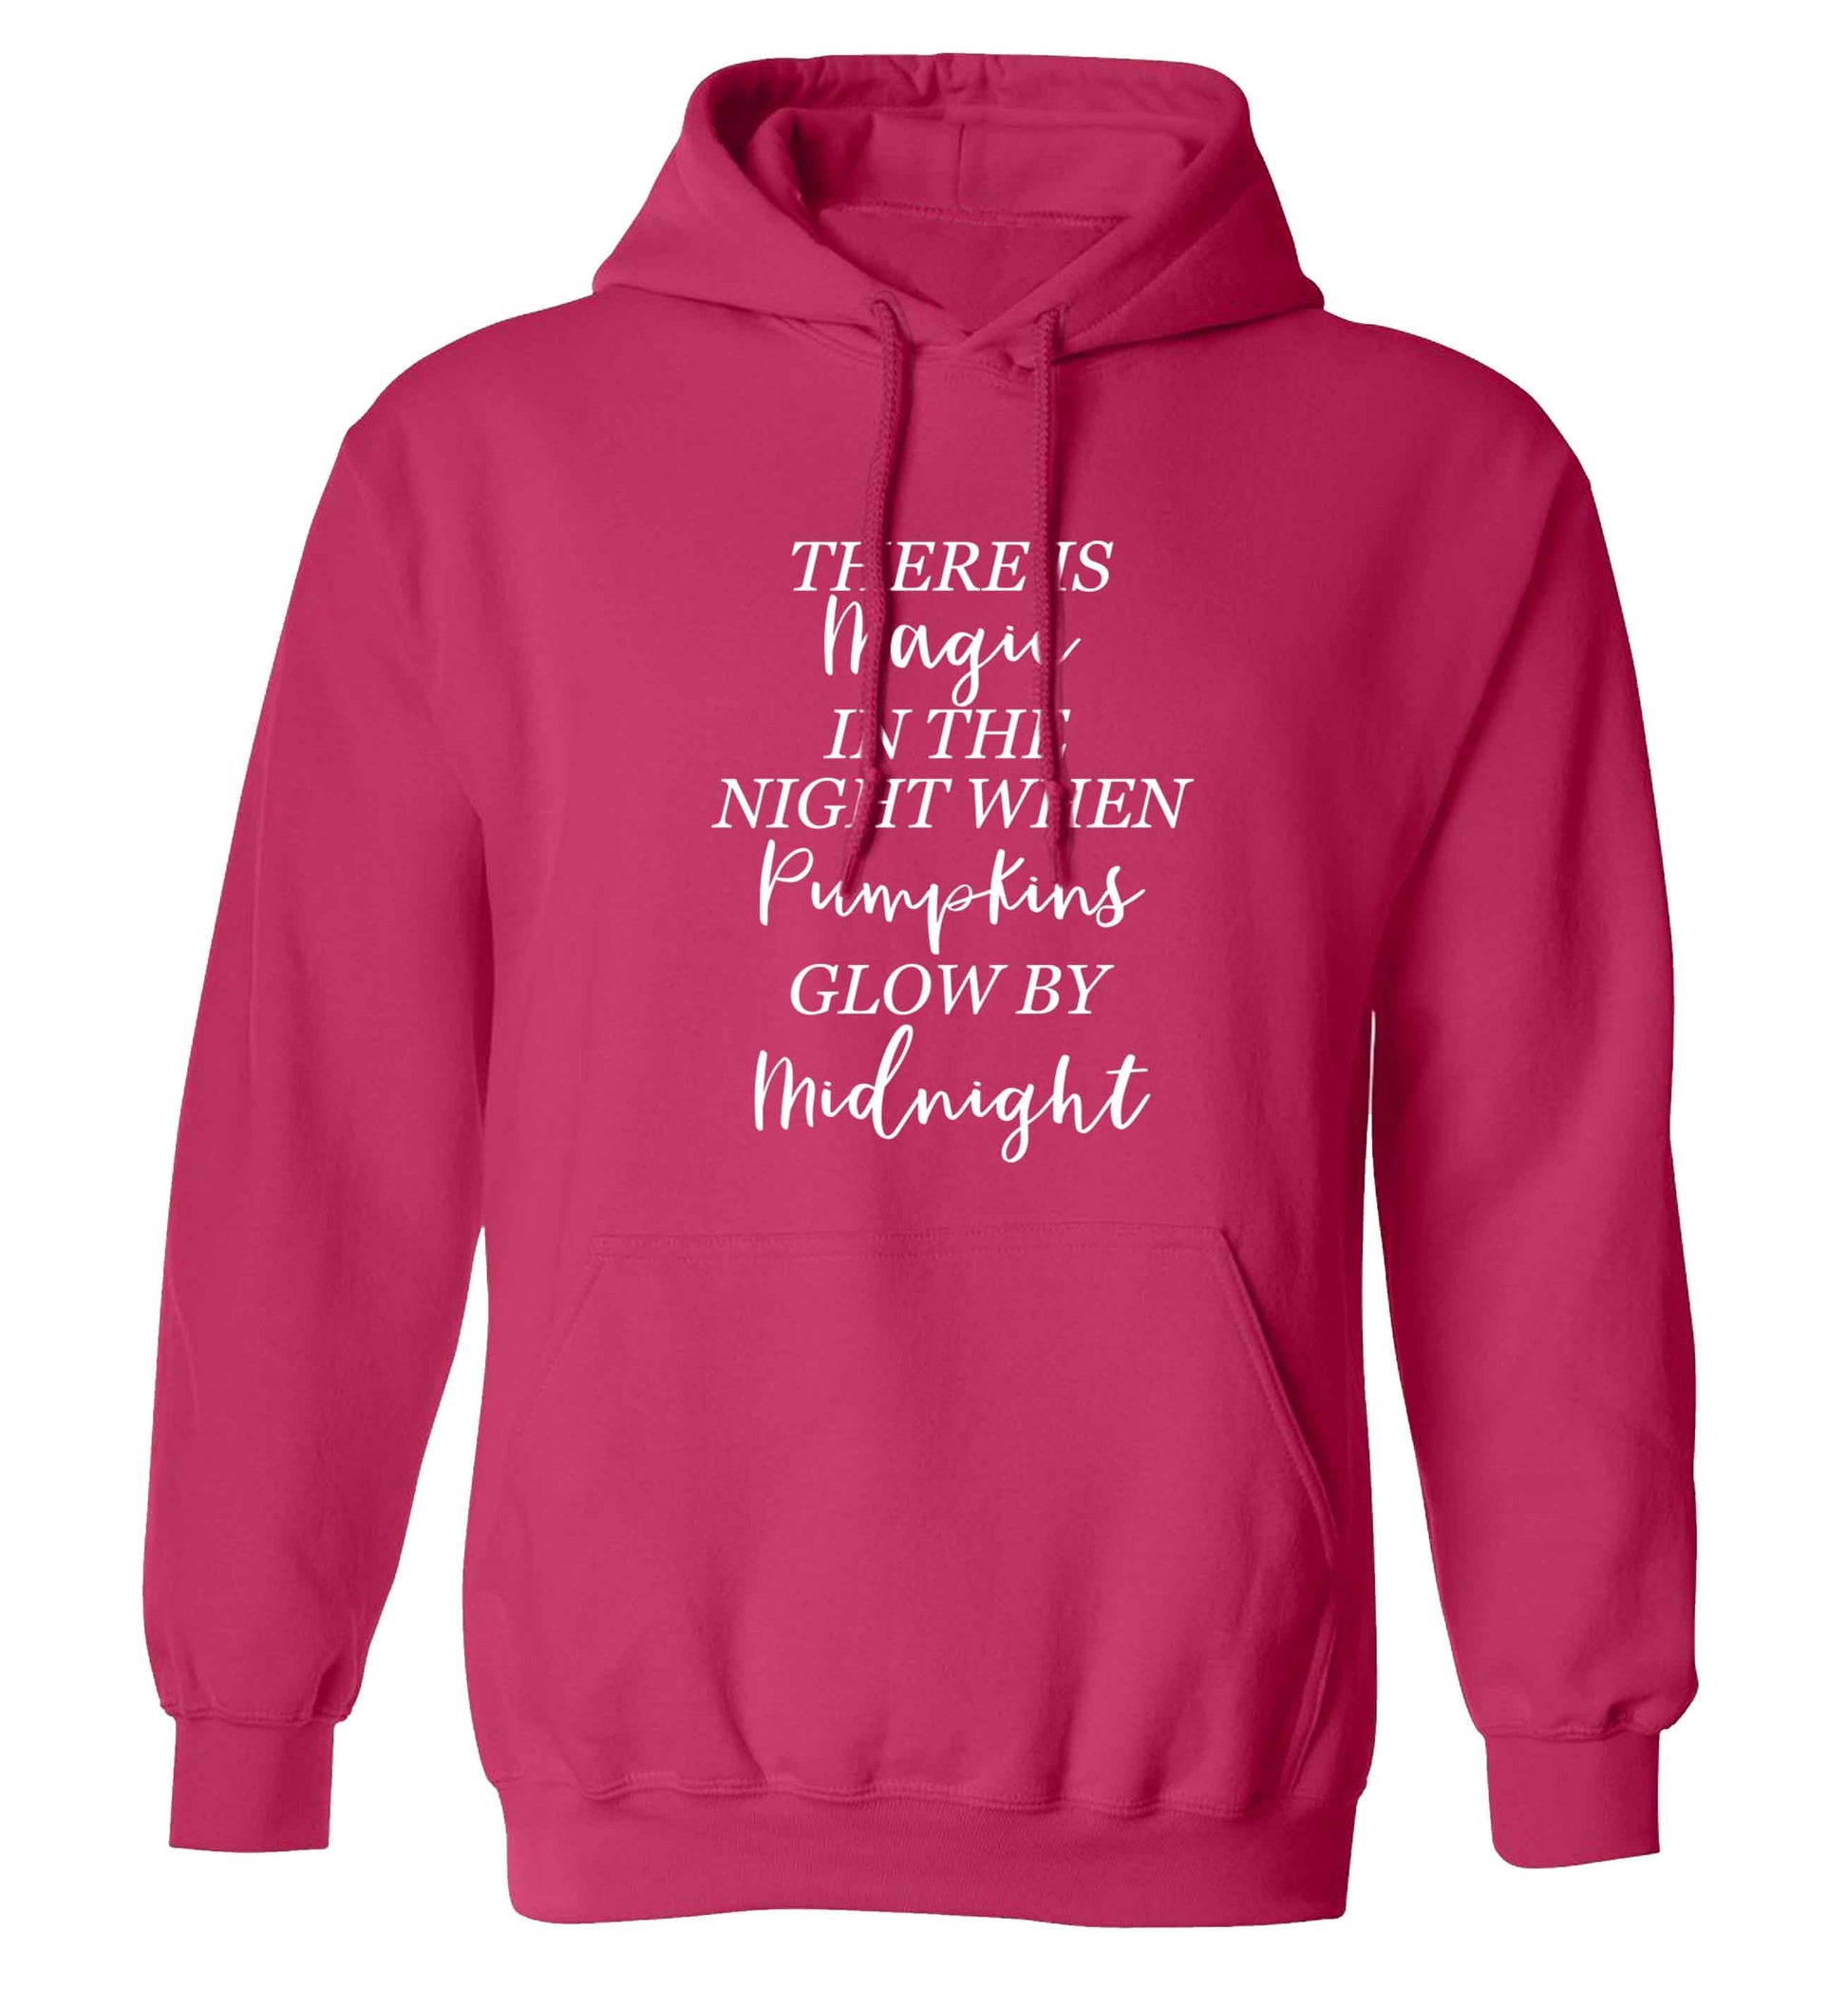 Magic in Night adults unisex pink hoodie 2XL